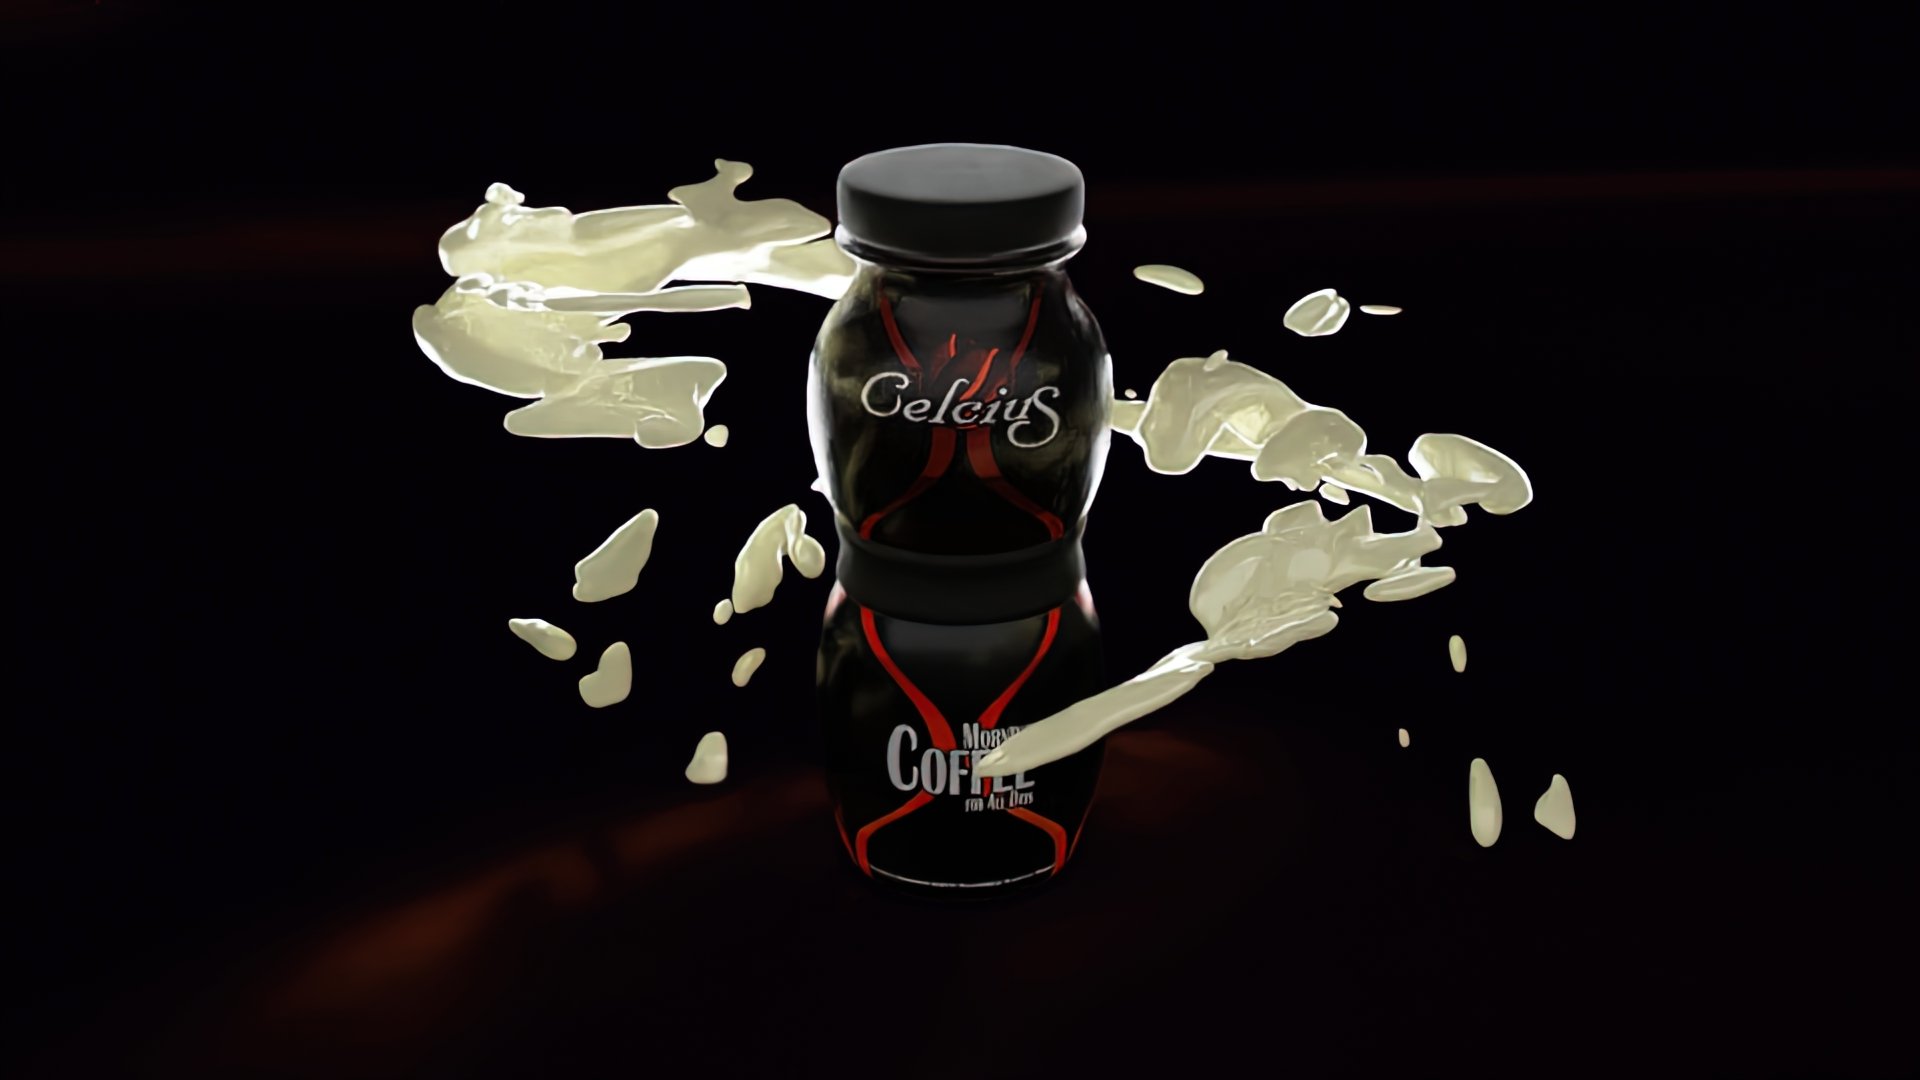 Celcius – Coffee